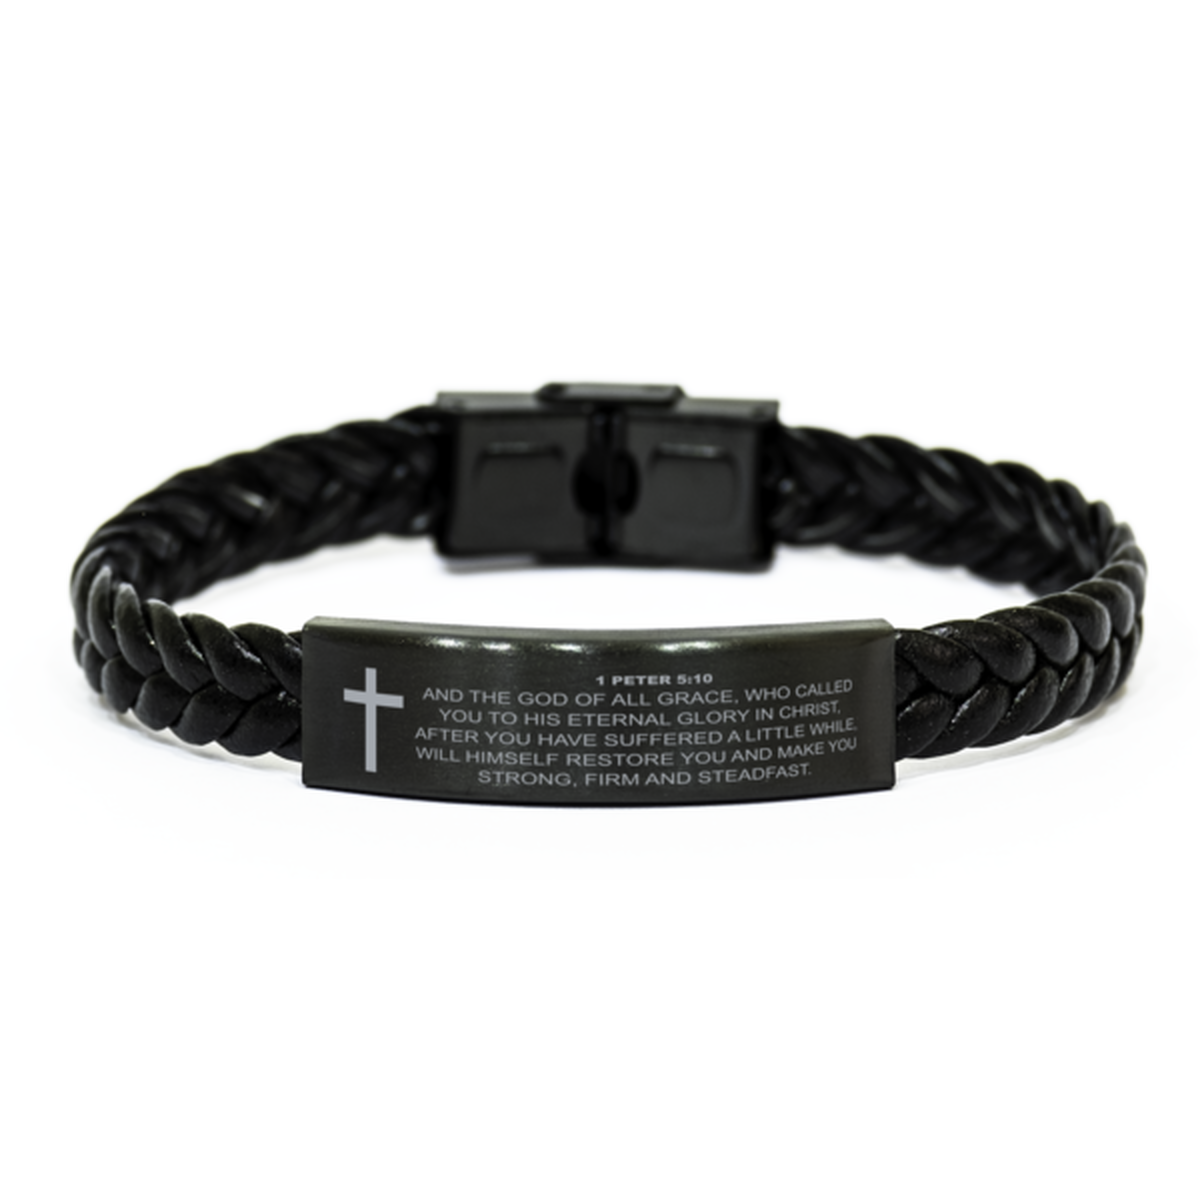 1 Peter 5:10 Bracelet, And The God Of All Grace, Bible Verse Bracelet, Christian Bracelet, Braided Leather Bracelet, Easter Gift